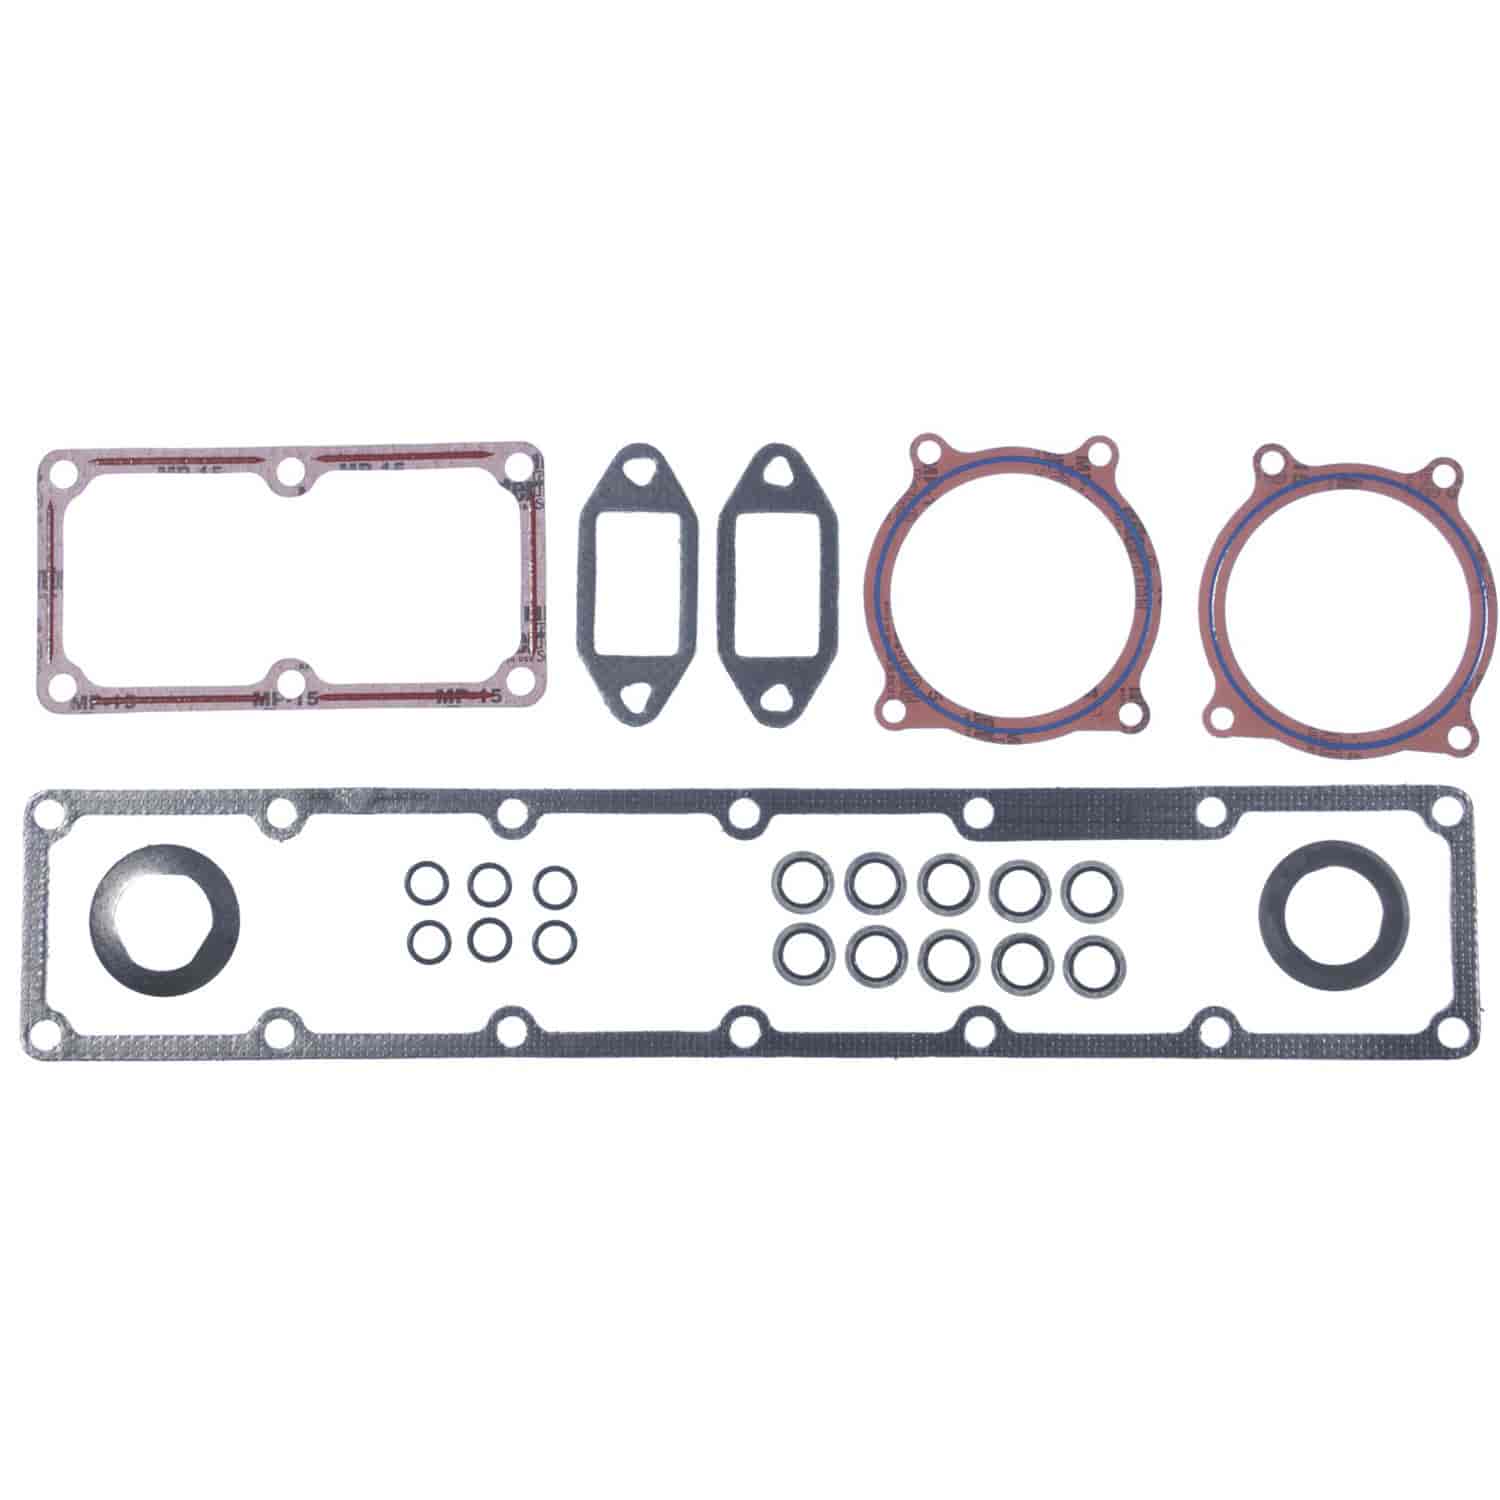 Intake Manifold Installation Kit for 2007-2010 Dodge Truck